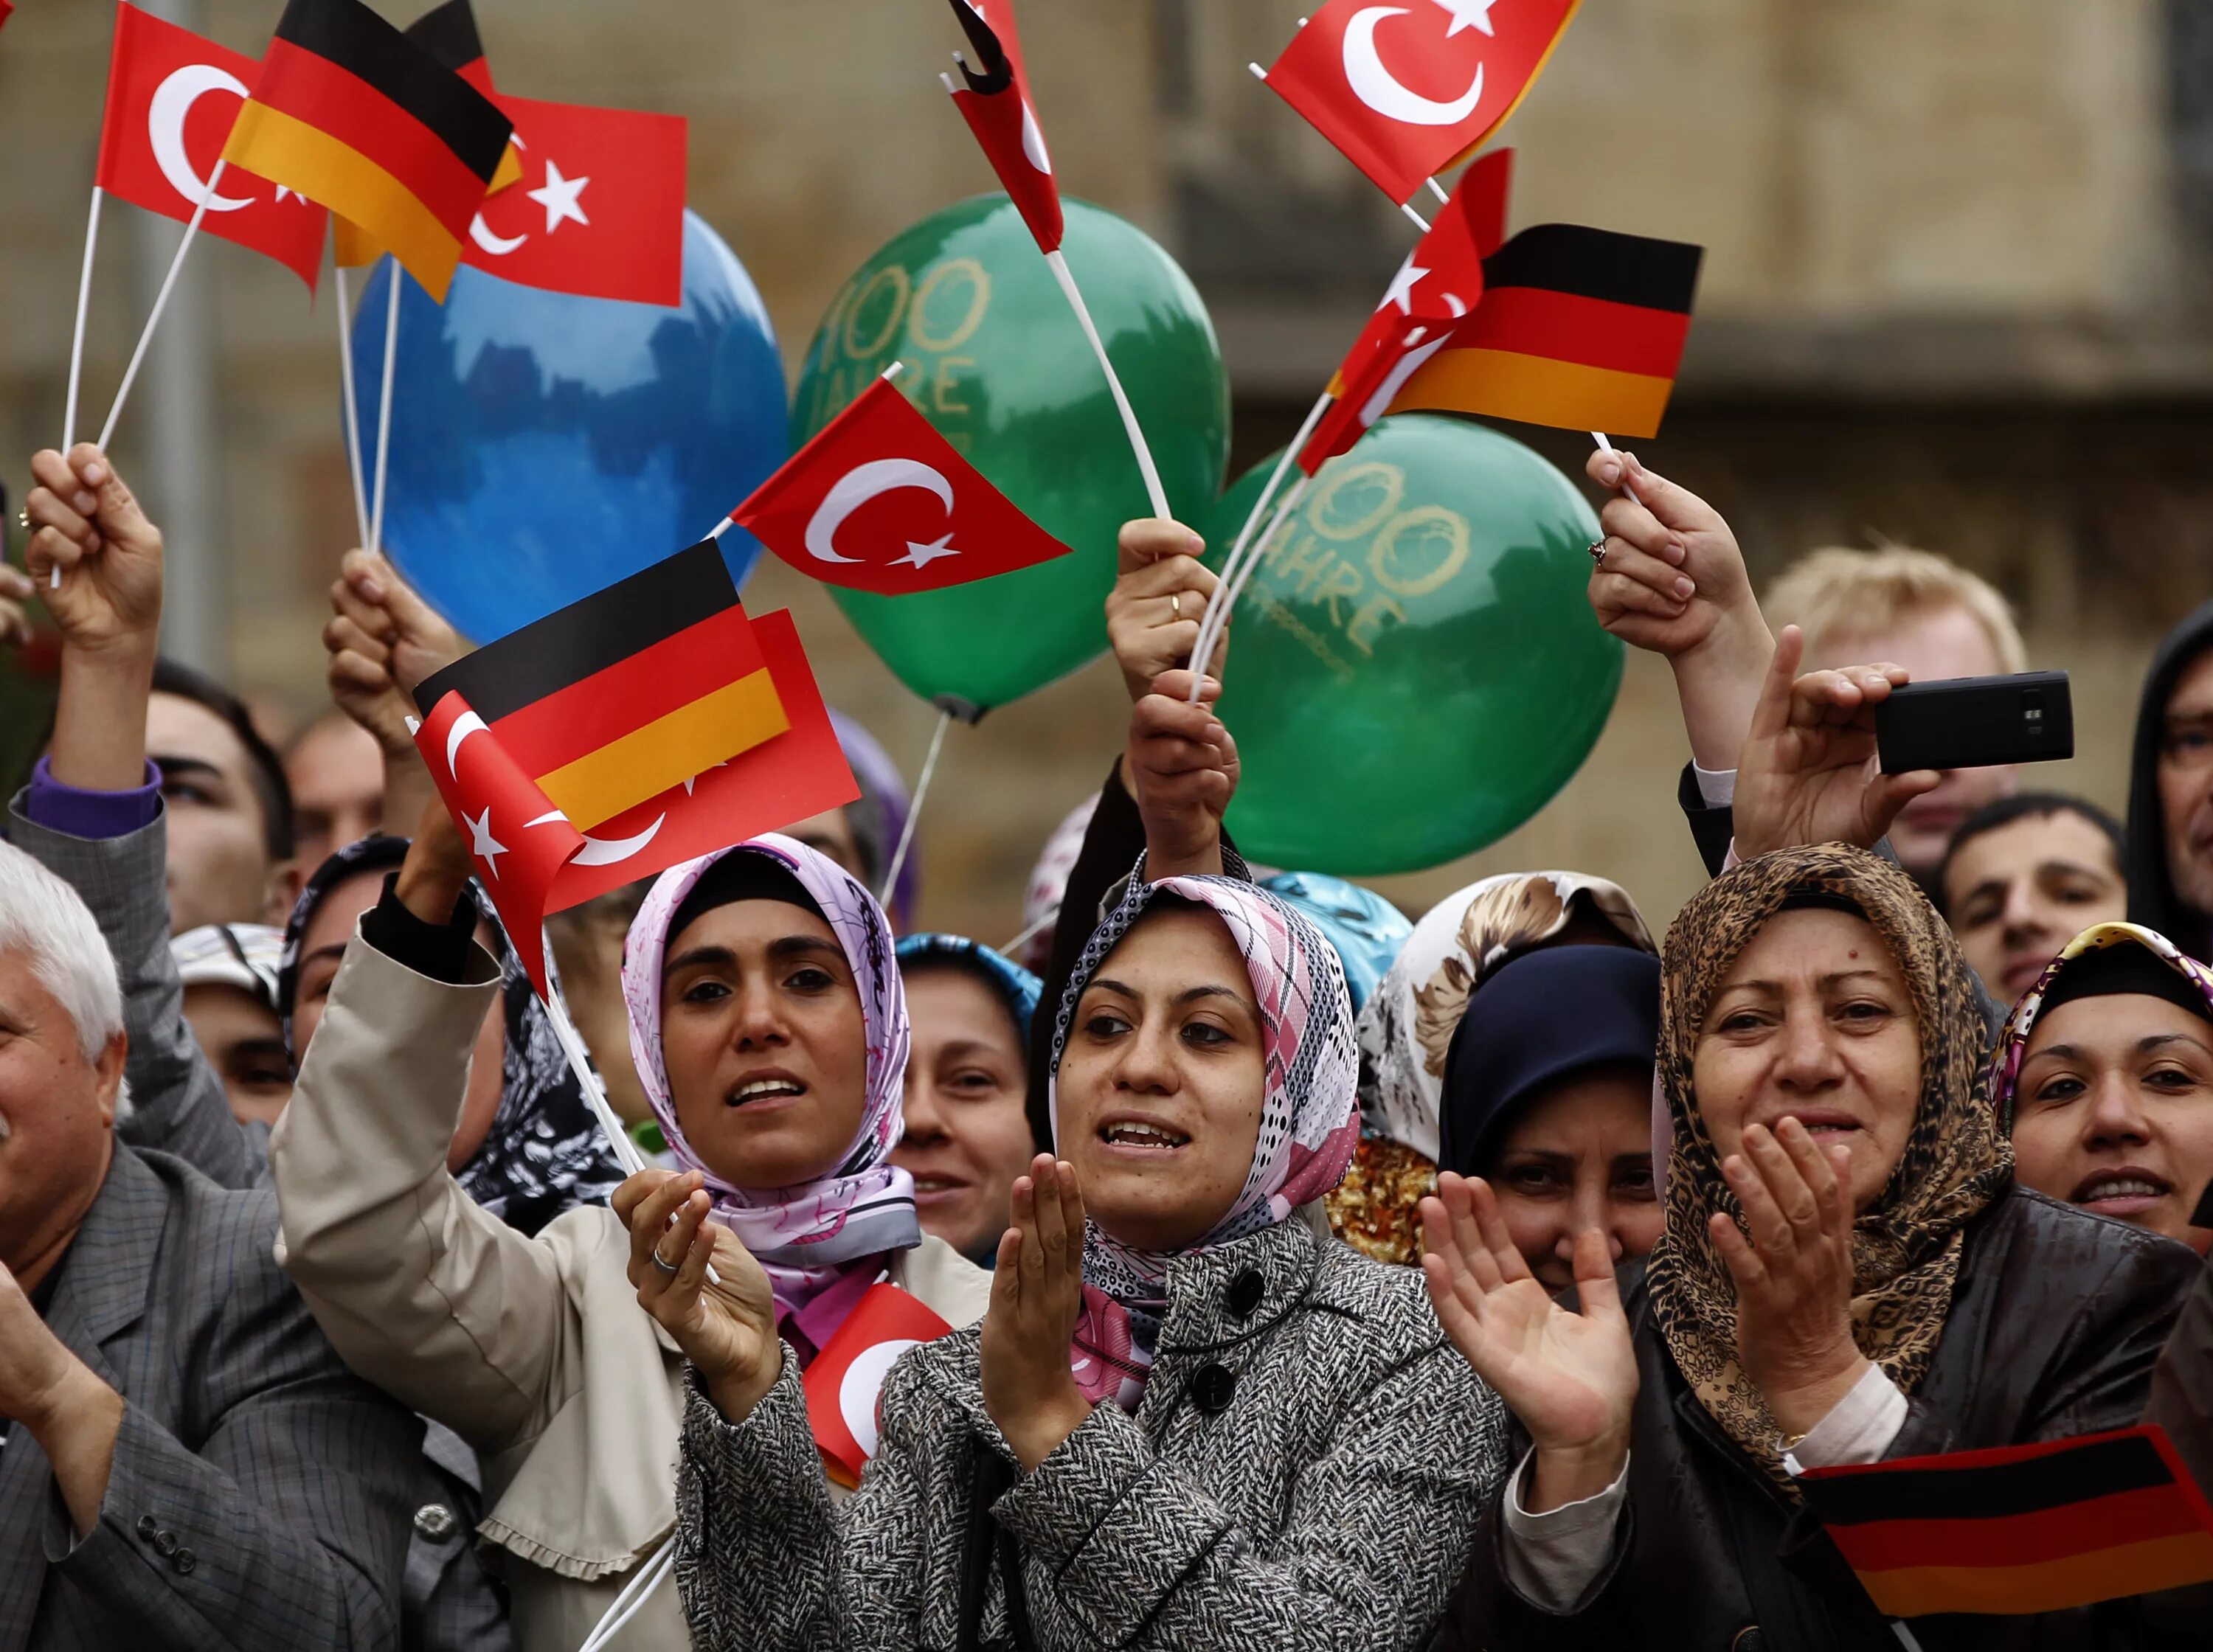 Turkey people. Турки в Европе. Мусульмане в Германии. Арабы в Германии. Турки в Германии.